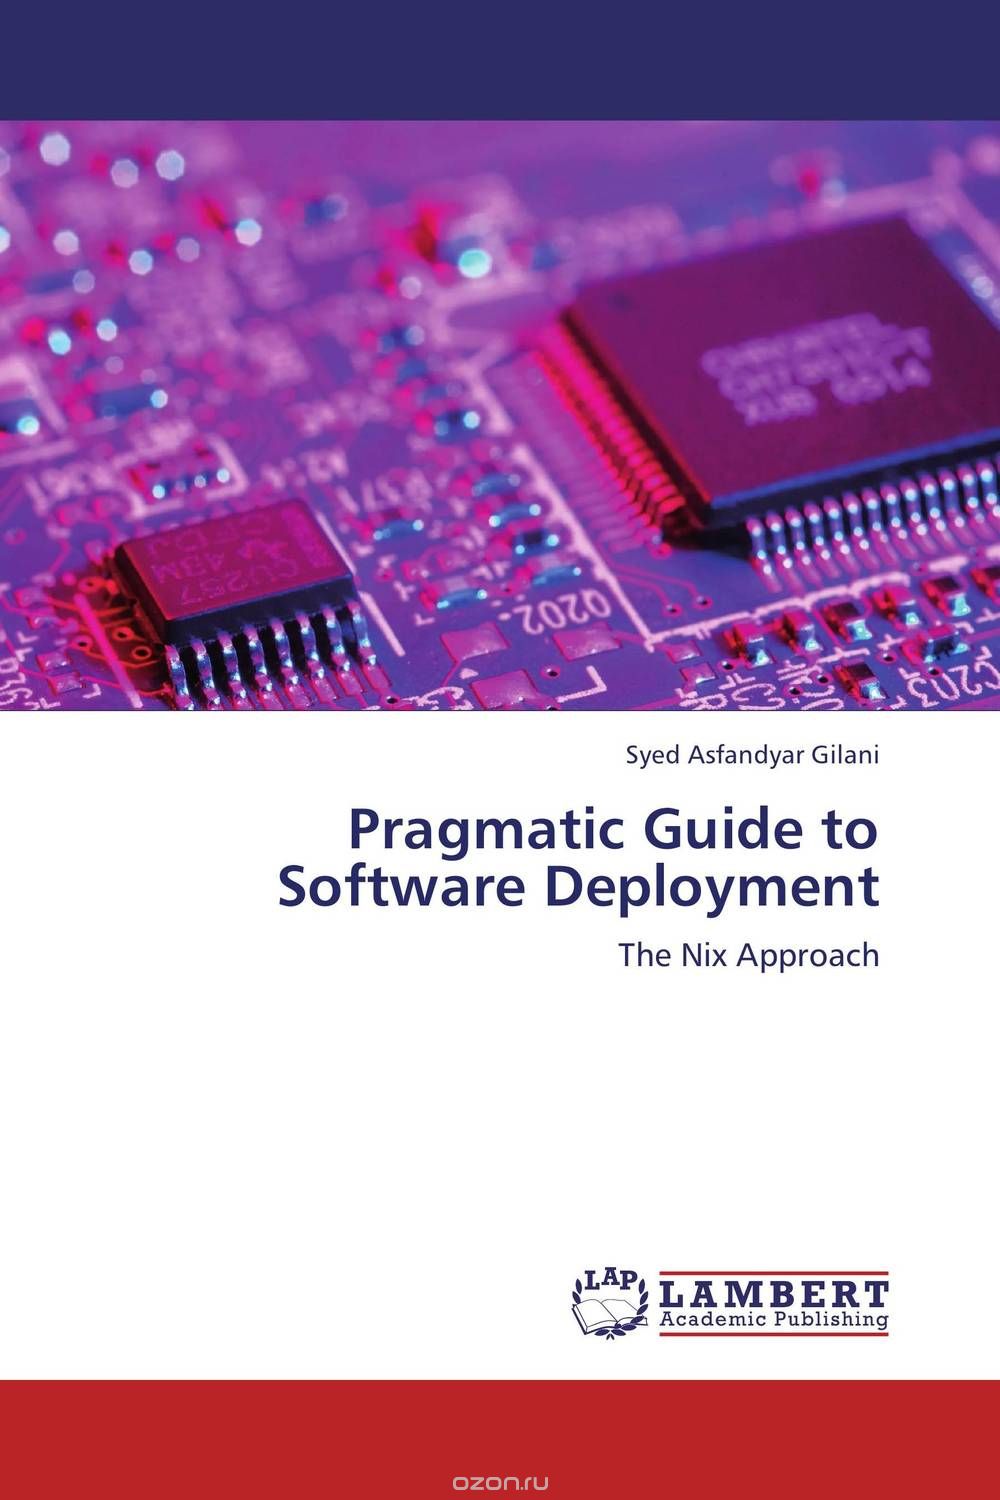 Скачать книгу "Pragmatic Guide to Software Deployment"